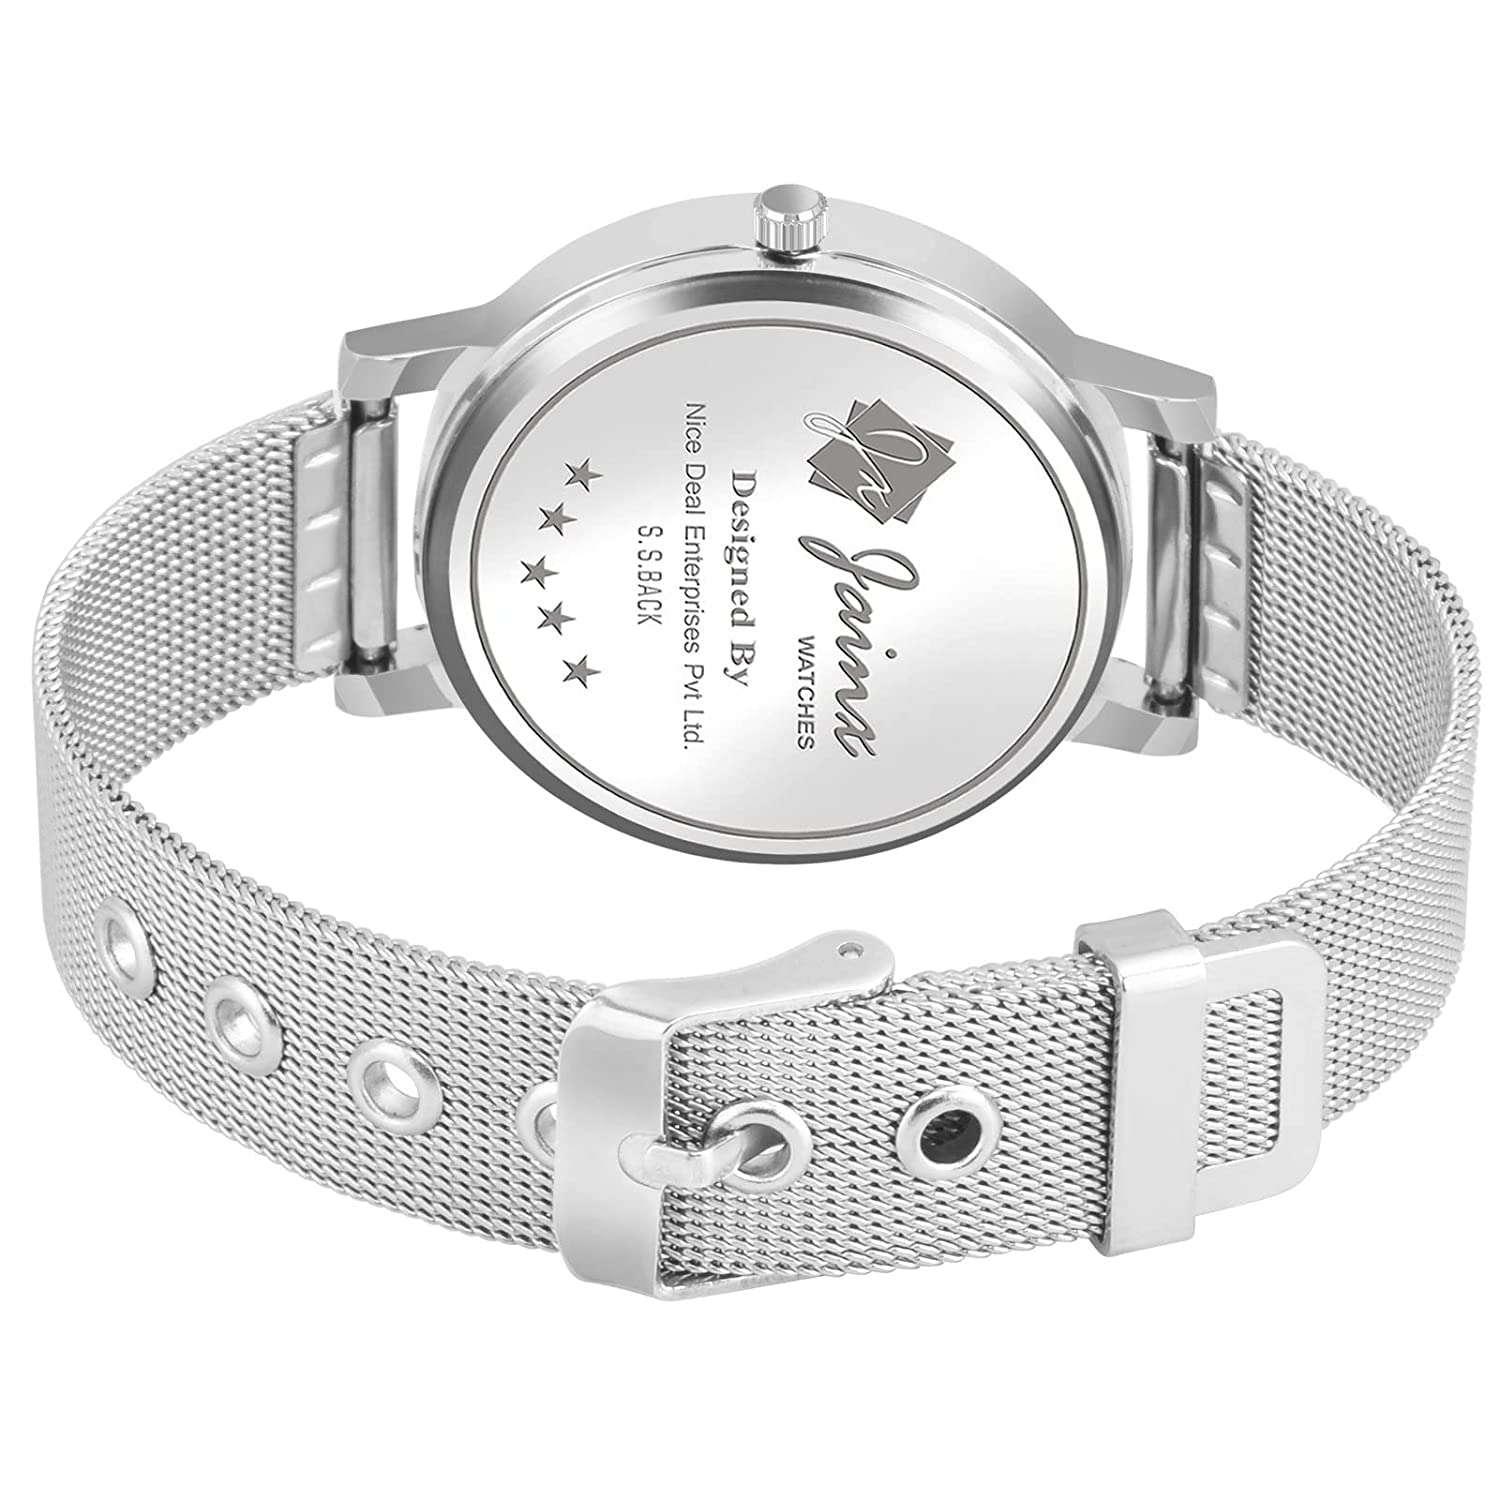 Silver Steel Mesh Chain Analog Watch - For Women JW687 - Jainx Store